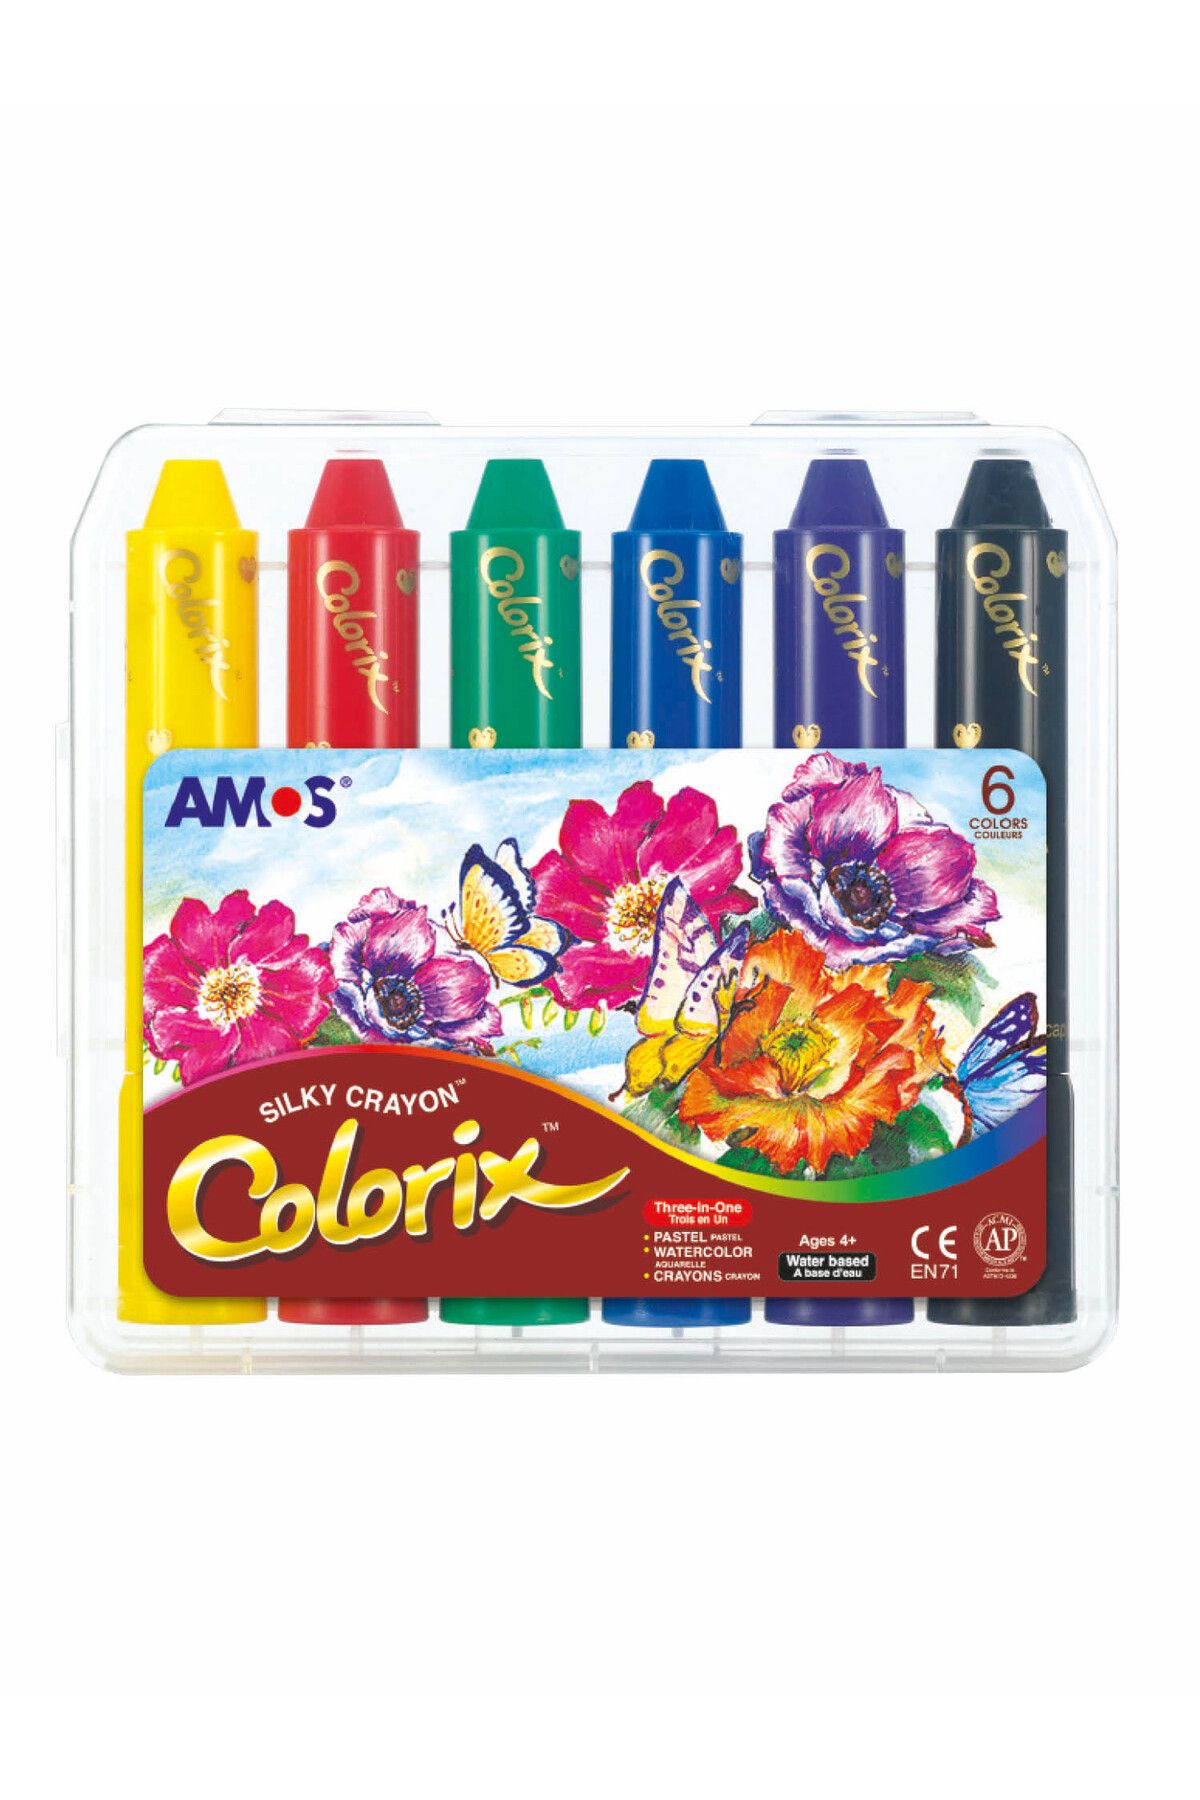 Amos Silky Crayon Colorix - Üçü Bir Arada Boya (MUM BOYA, PASTEL BOYA, SULUBOYA) - 6 Renk